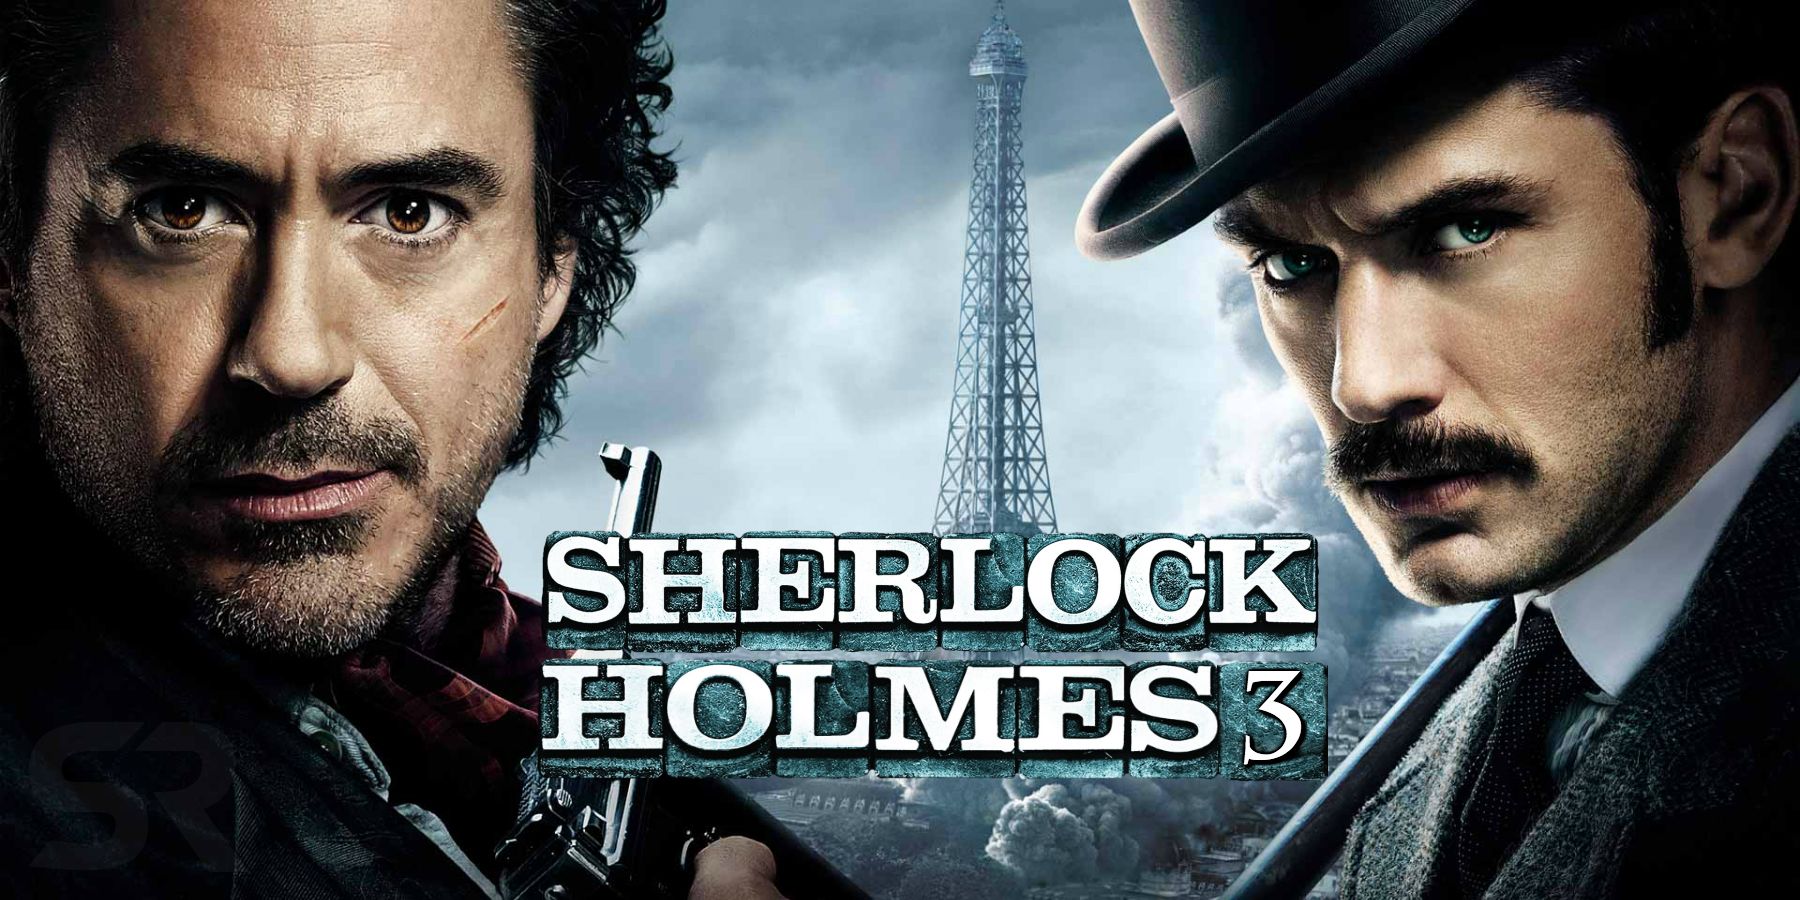 Custom Sherlock Holmes 3 logo with Robert Downey Jr. and Jude Law